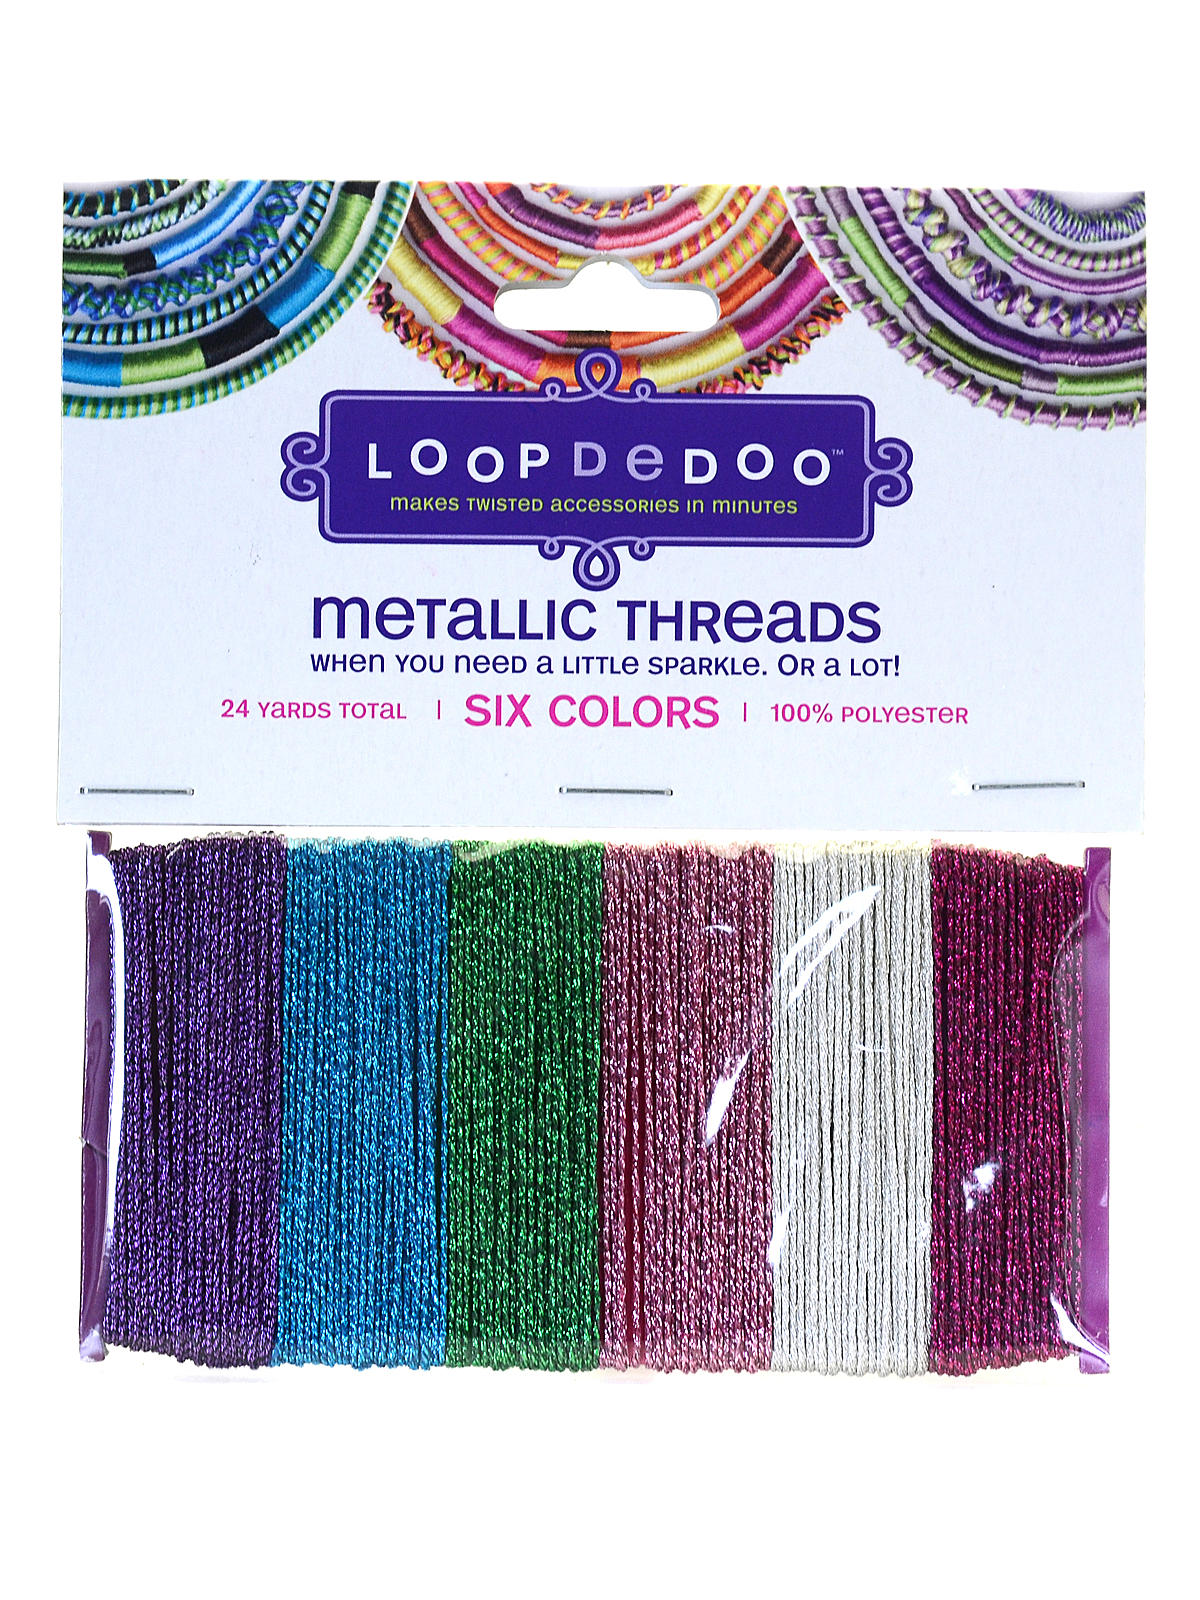 Loopdedoo Spinning Loom Metallic Thread Pack Of 6 Colors, 4.5 Yards Each